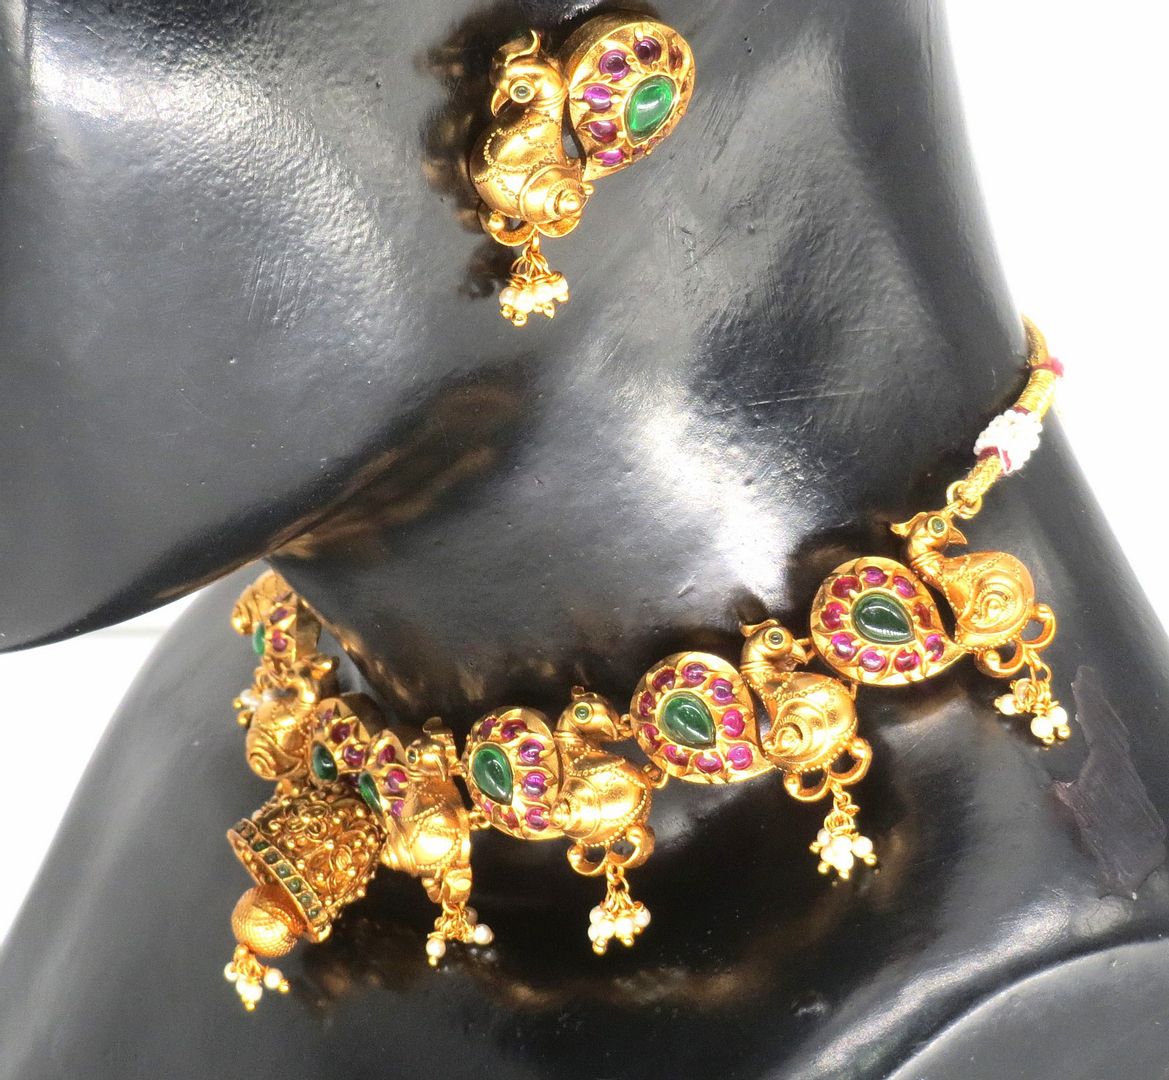 Jewelshingar Jewellery Fine Antique Polki Kundan Gold Plated Multi Colour Necklace For Women ( 61251AST )